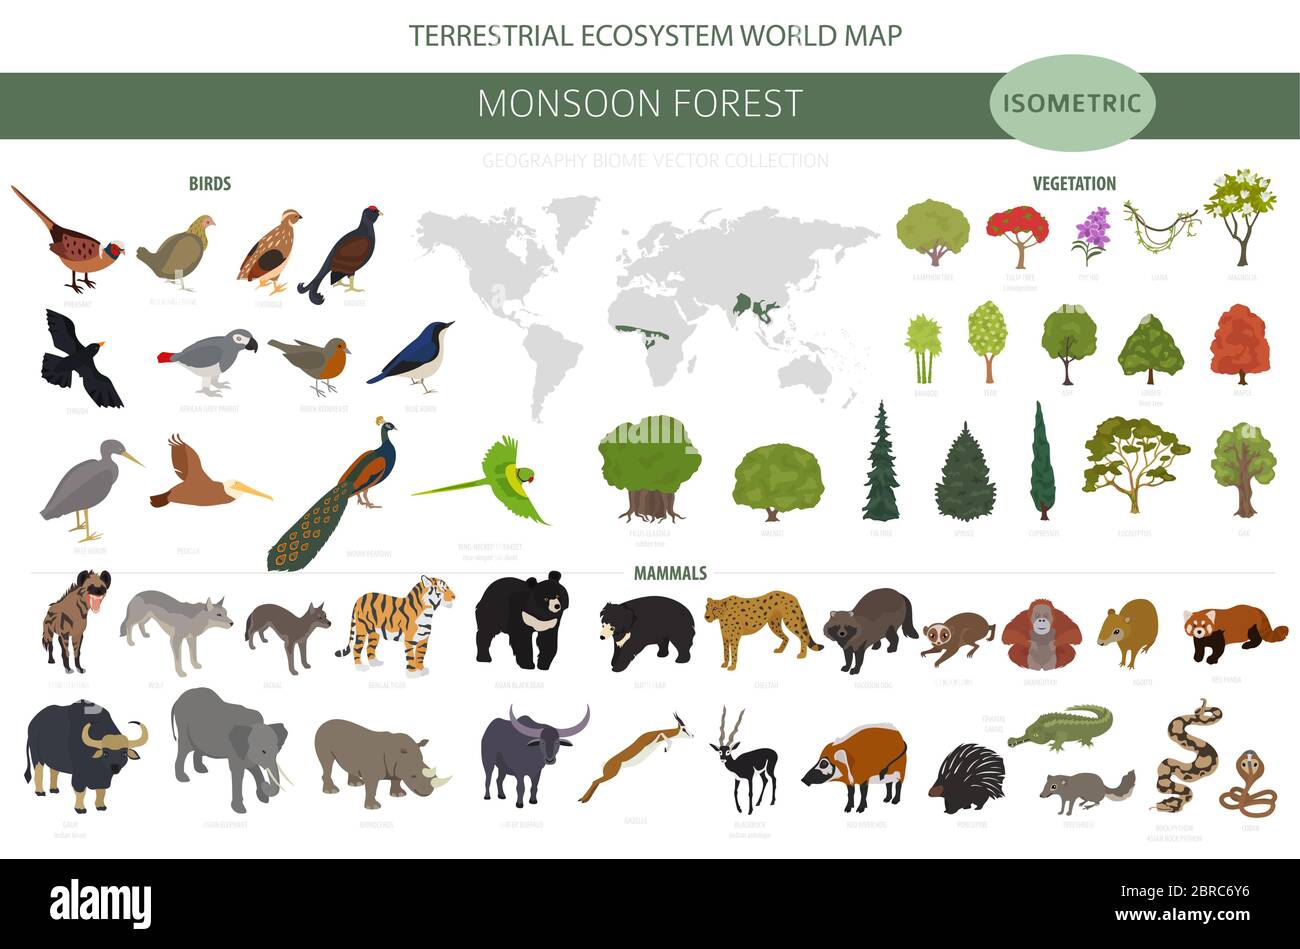 Monsoon forest biome, natural region infographic. Terrestrial ecosystem world map. Animals, birds and vegetations isometric design set. Vector illustr Stock Vector